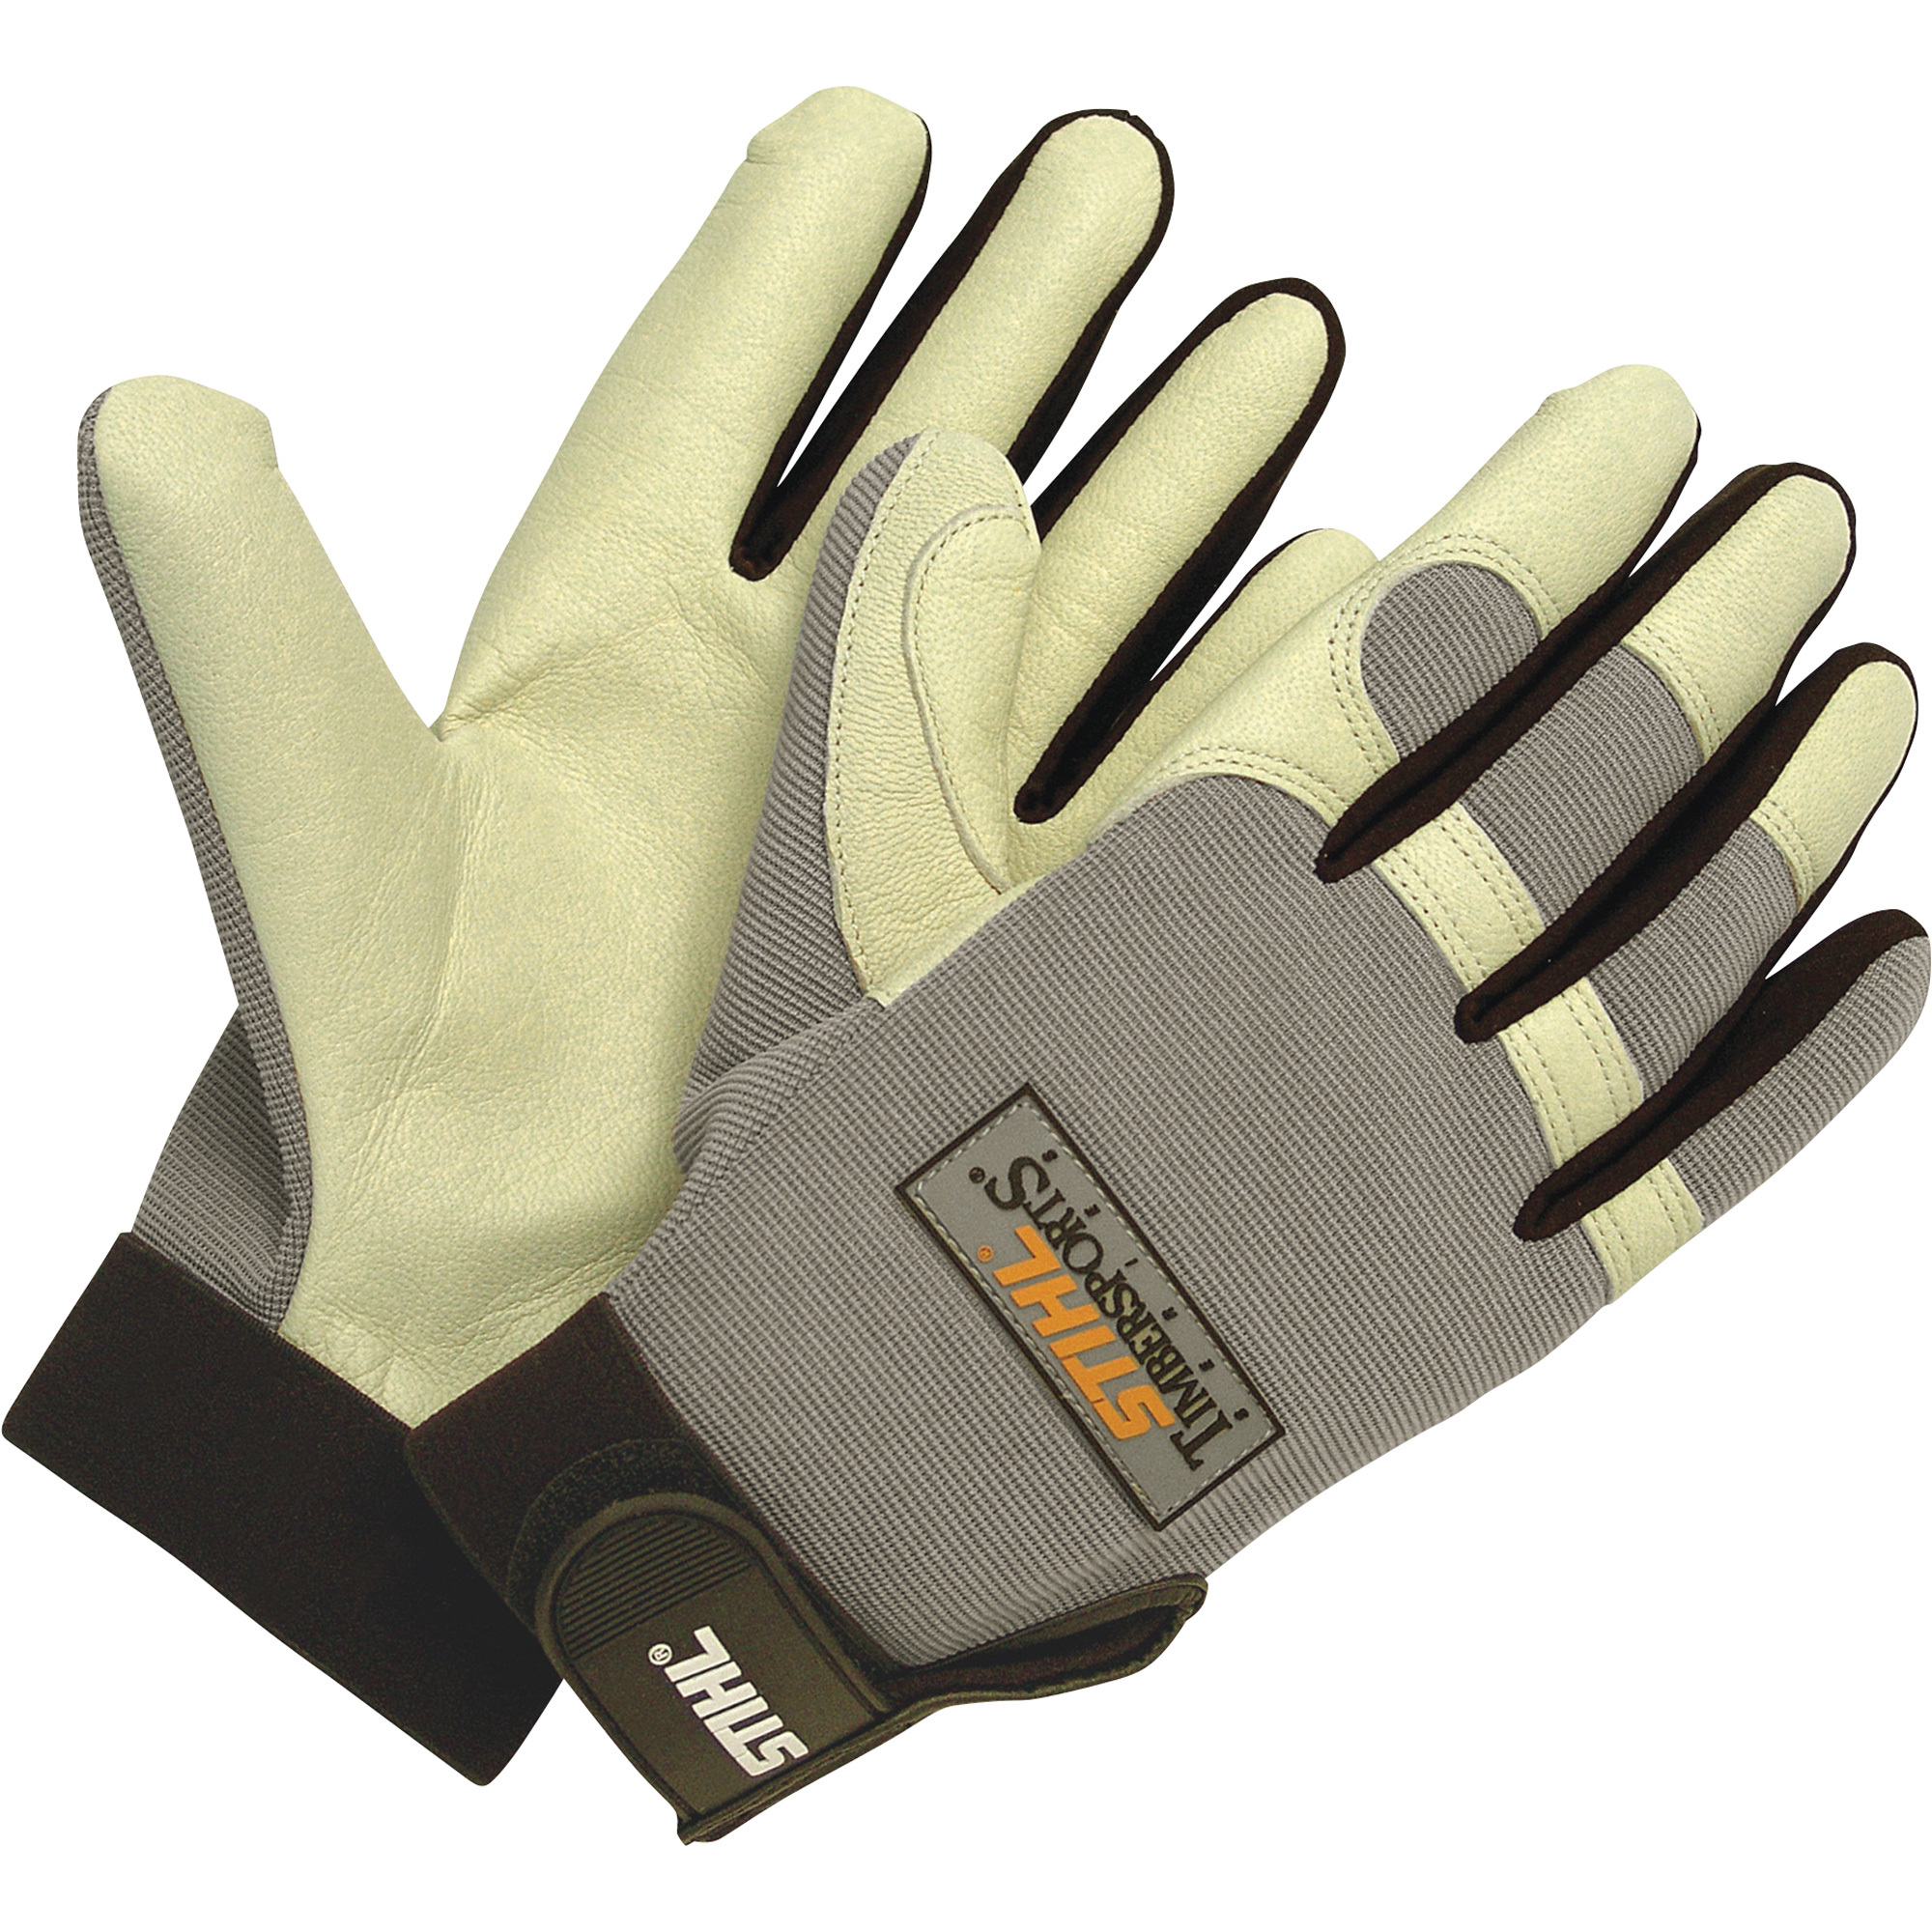 STIHL Work Gloves, XL Size, Unisex, Model 7010 884 1135